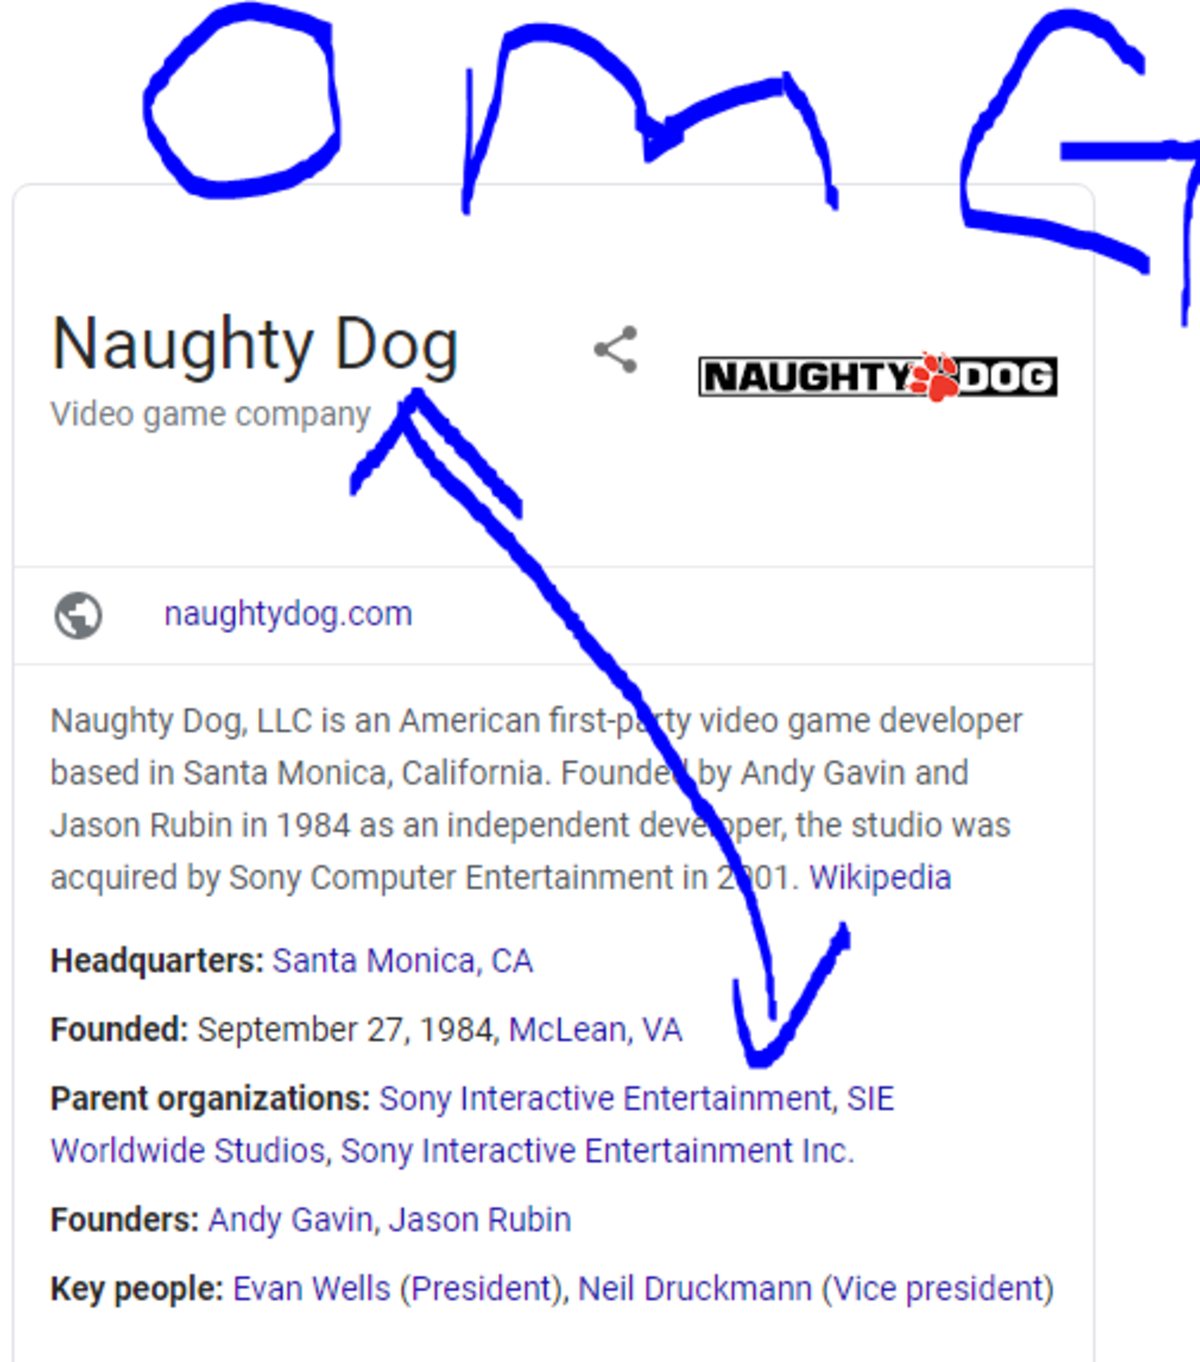 Naughty Dog, LLC